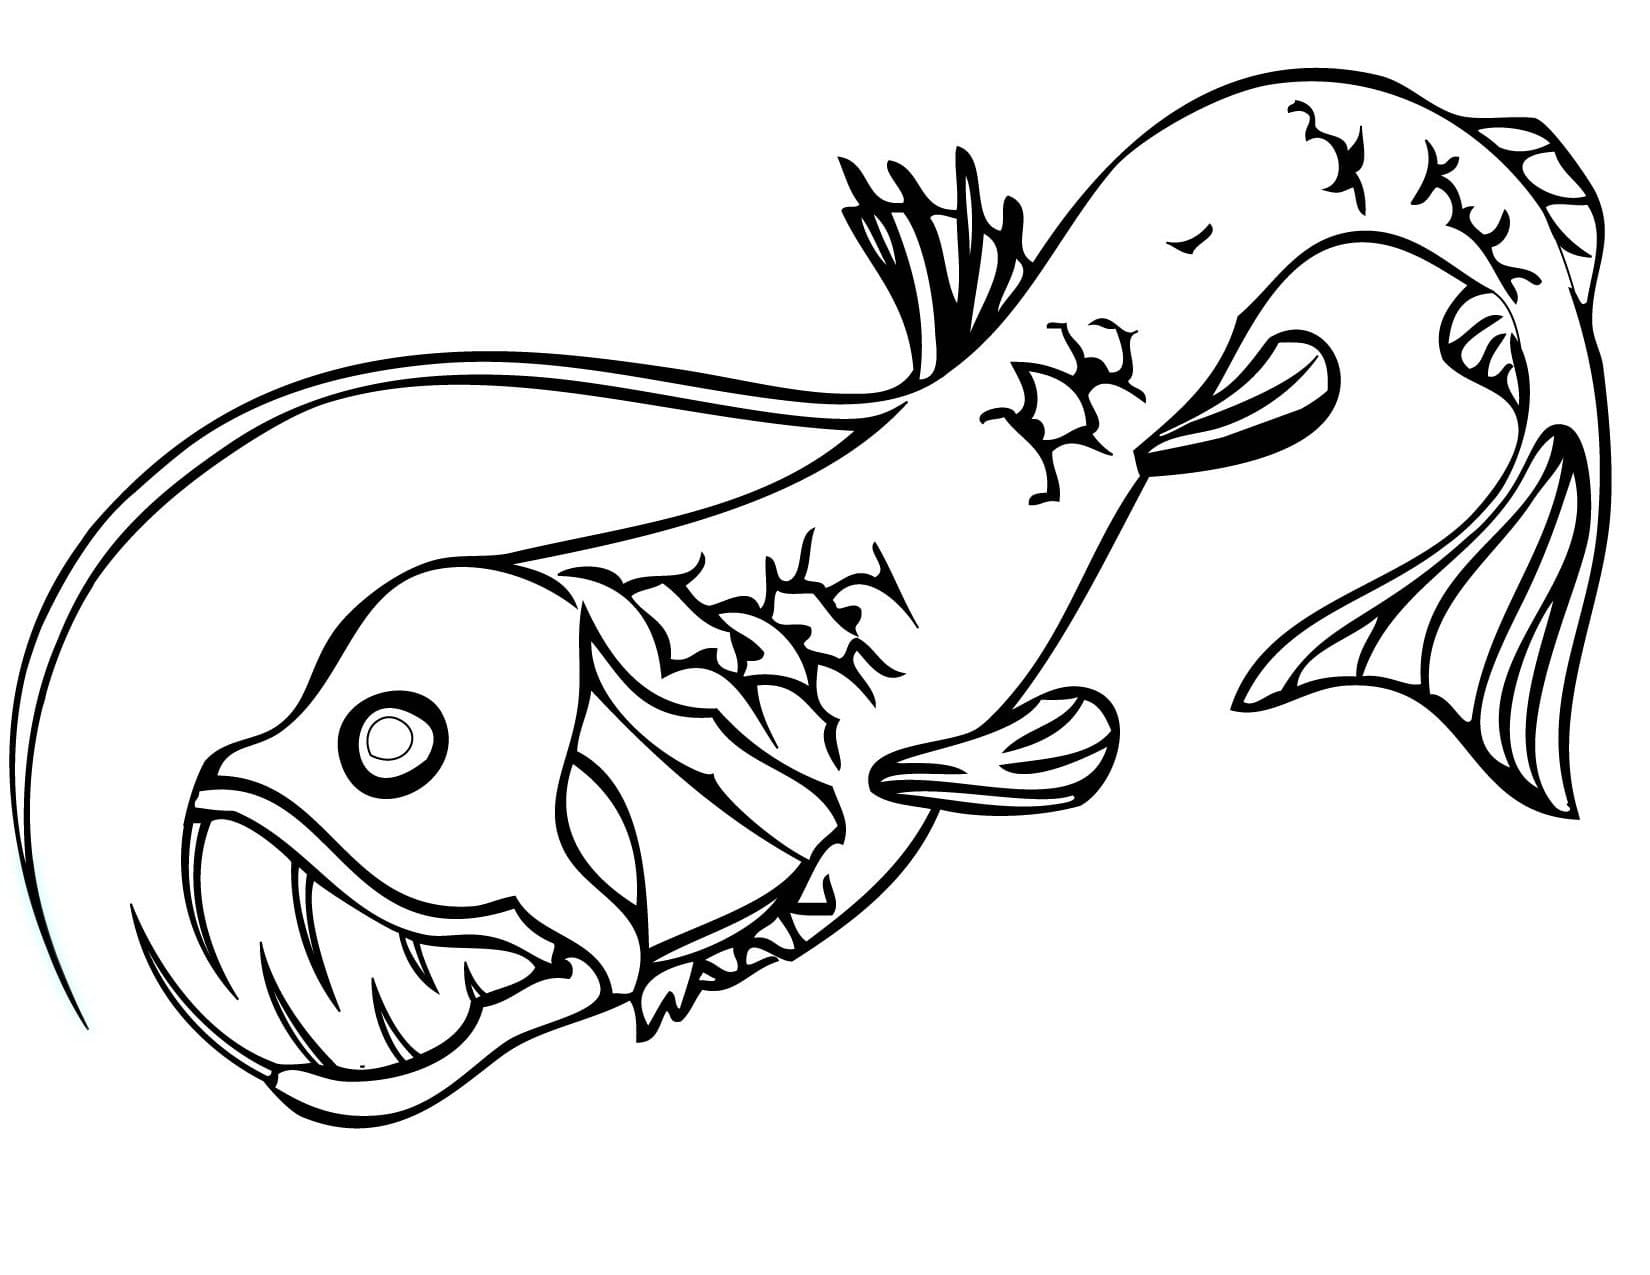 A Viperfish Coloring Page